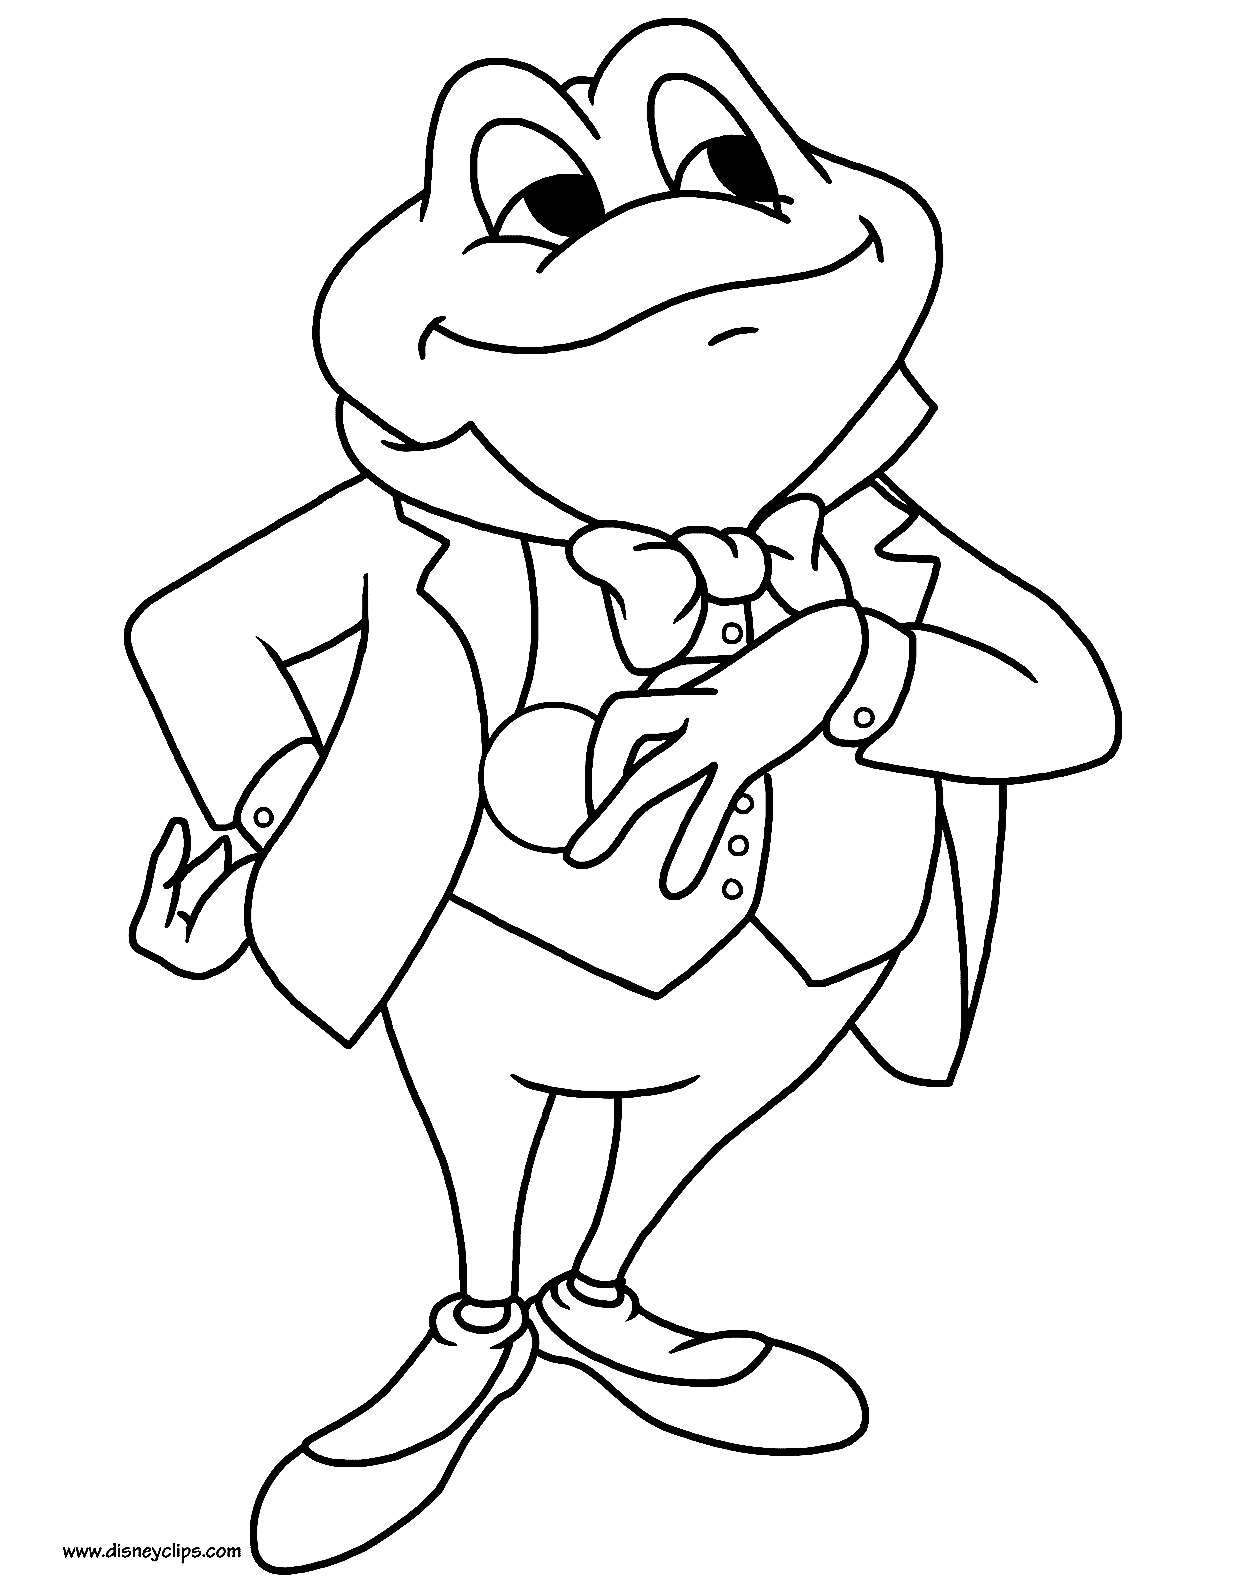 Mr. Toad elegant Coloring Page